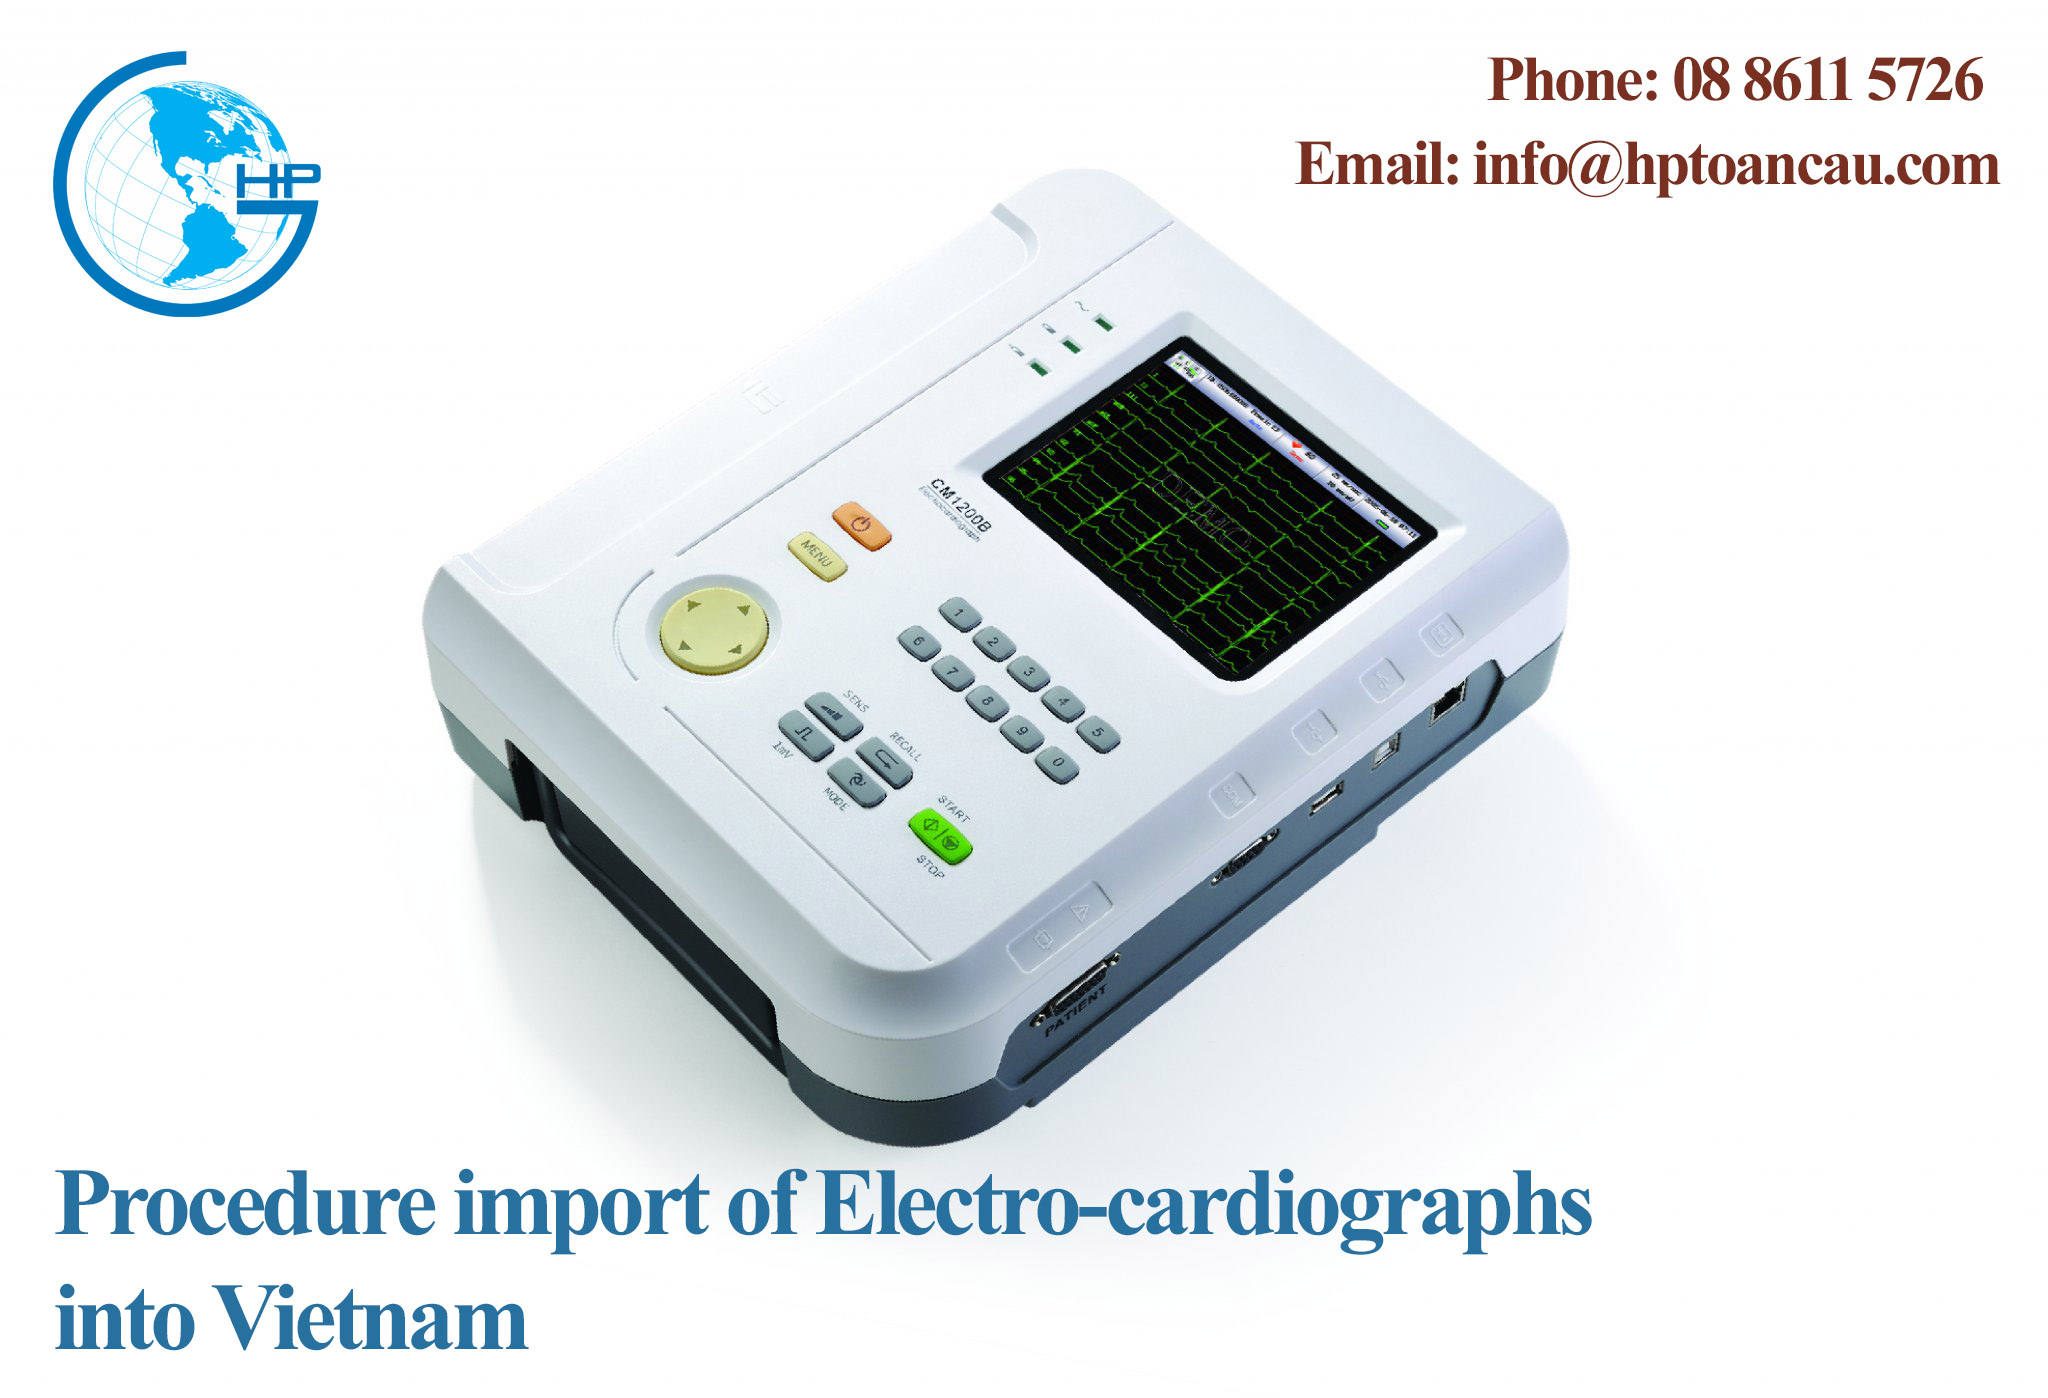 Procedure and Import duties of Electro-cardiographs into Vietnam